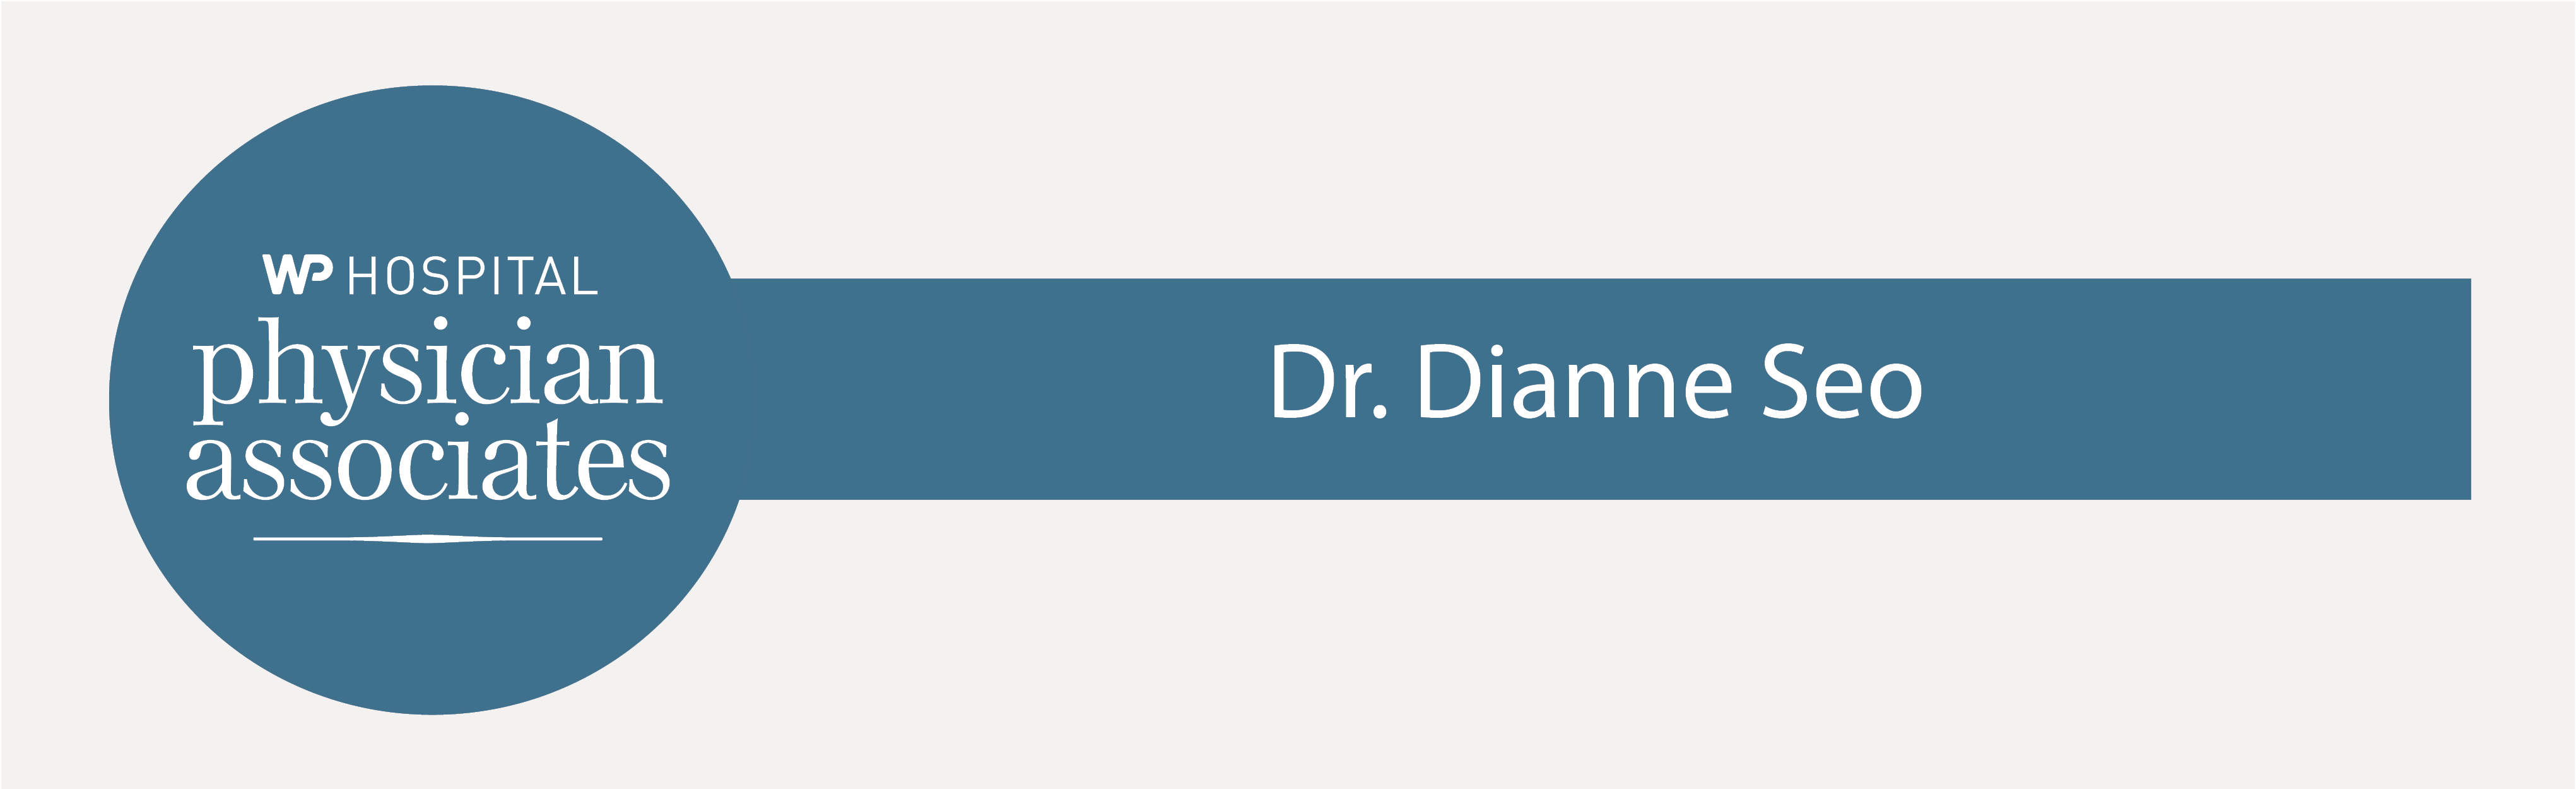 Dr. Dianne Seo Joins White Plains Hospital Center for Cancer Care